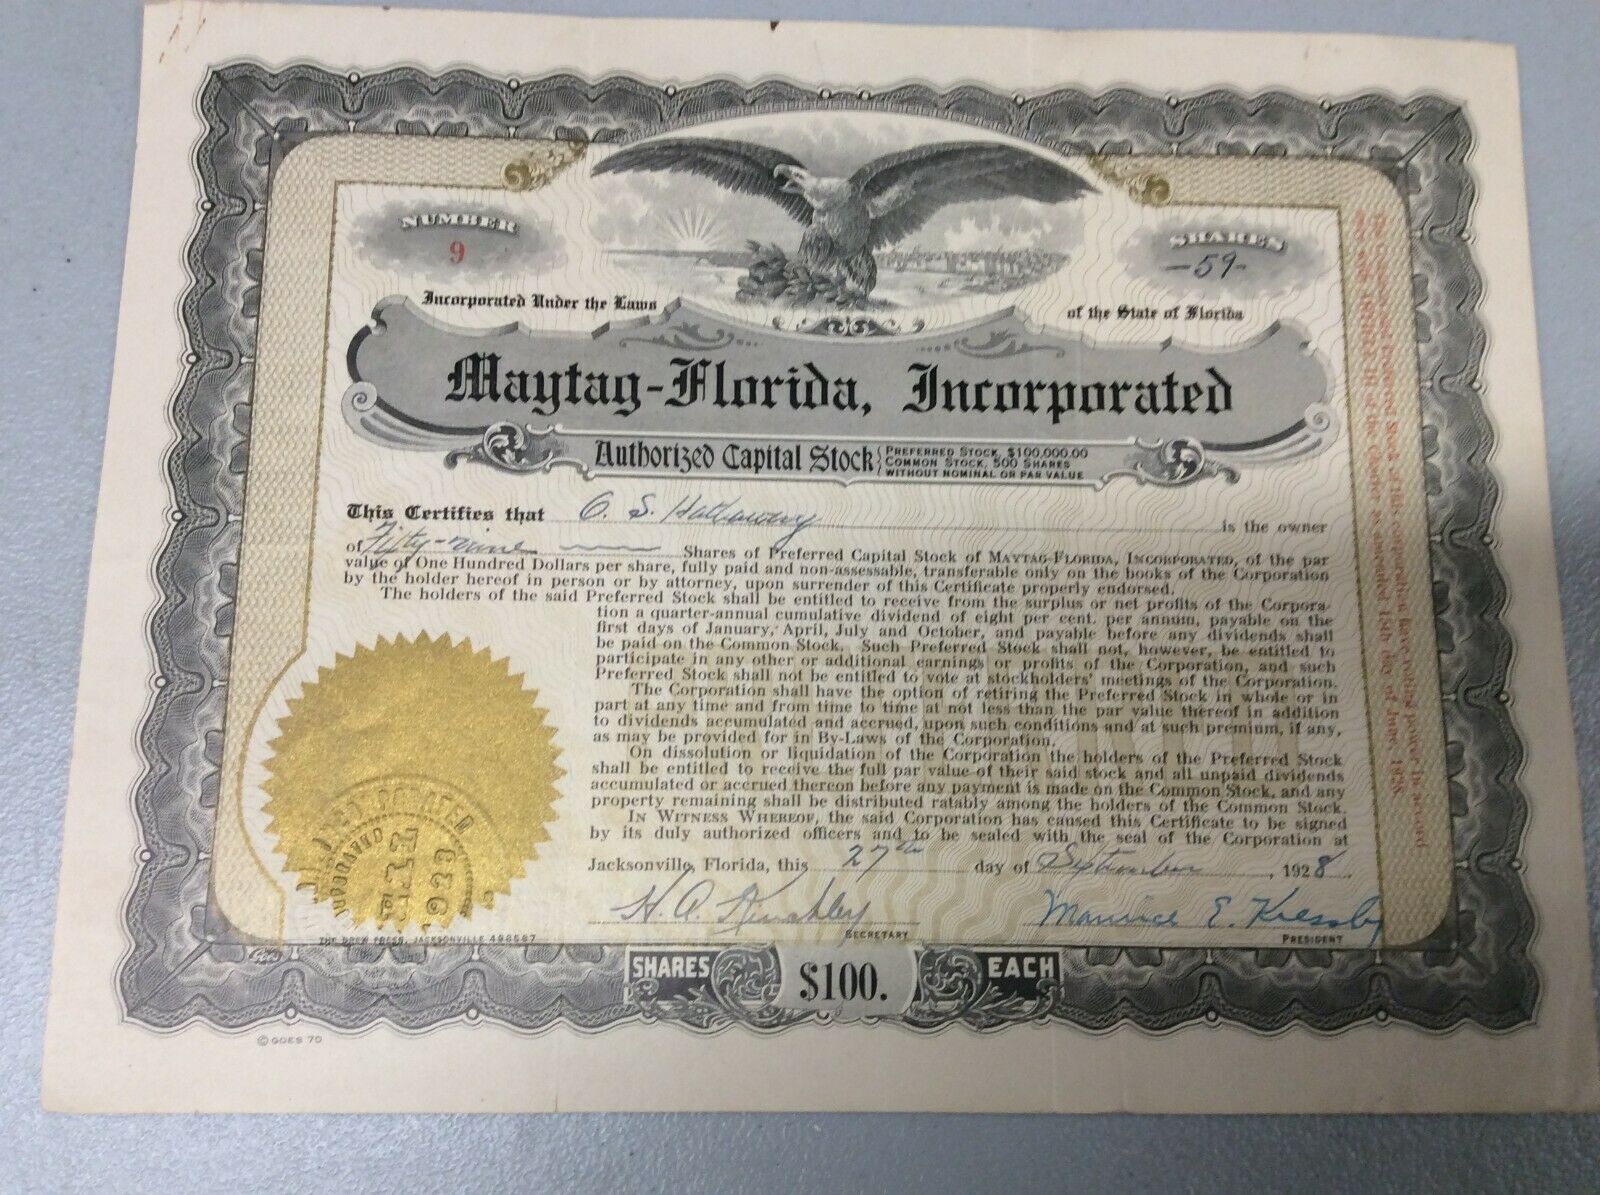 Maytag-florida Incorporated 1928